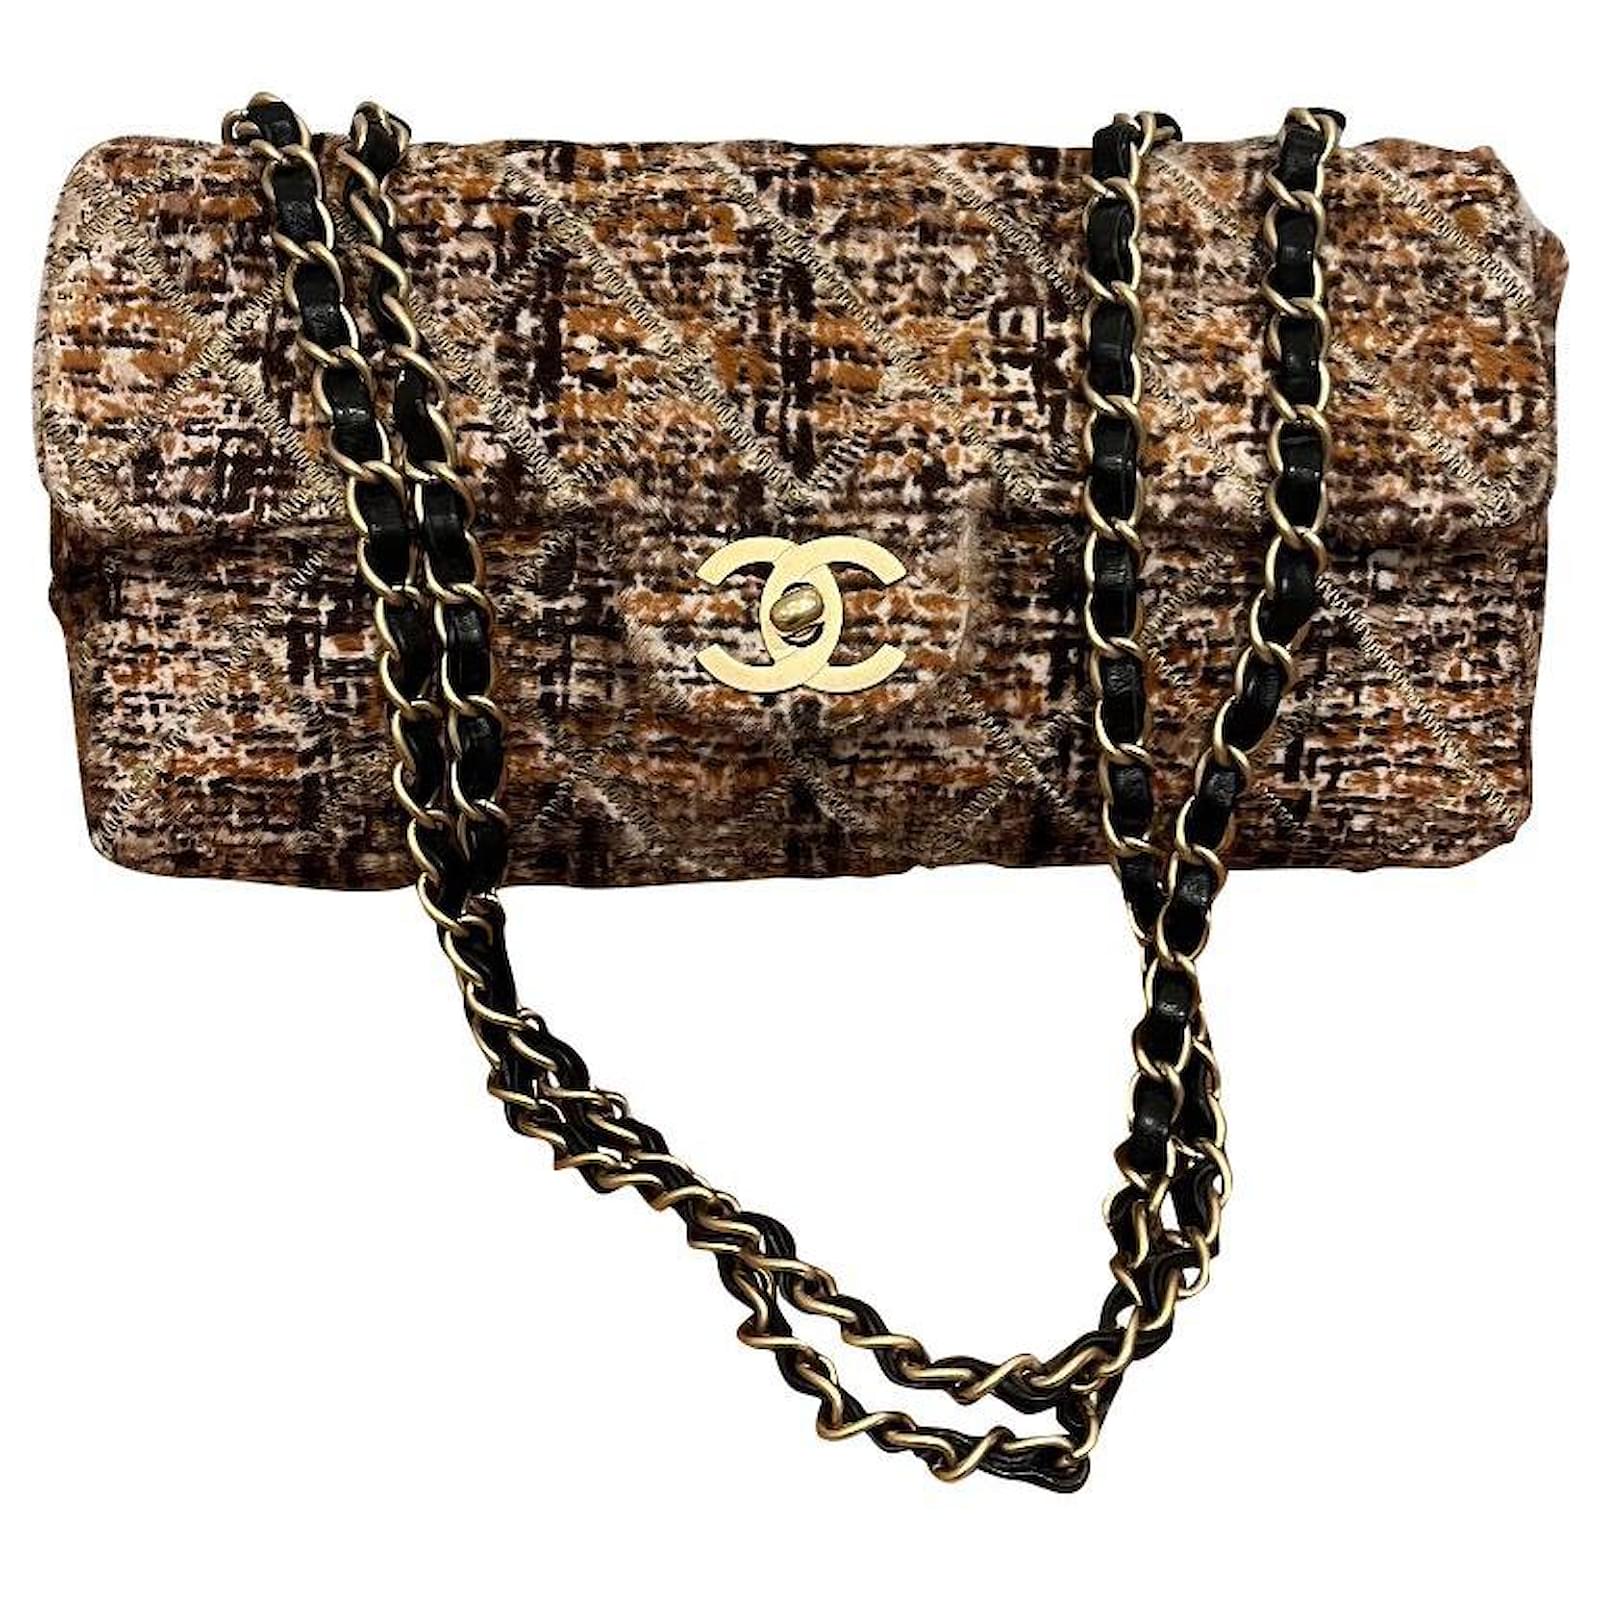 CHANEL, Bags, Chanel Baguette Bag